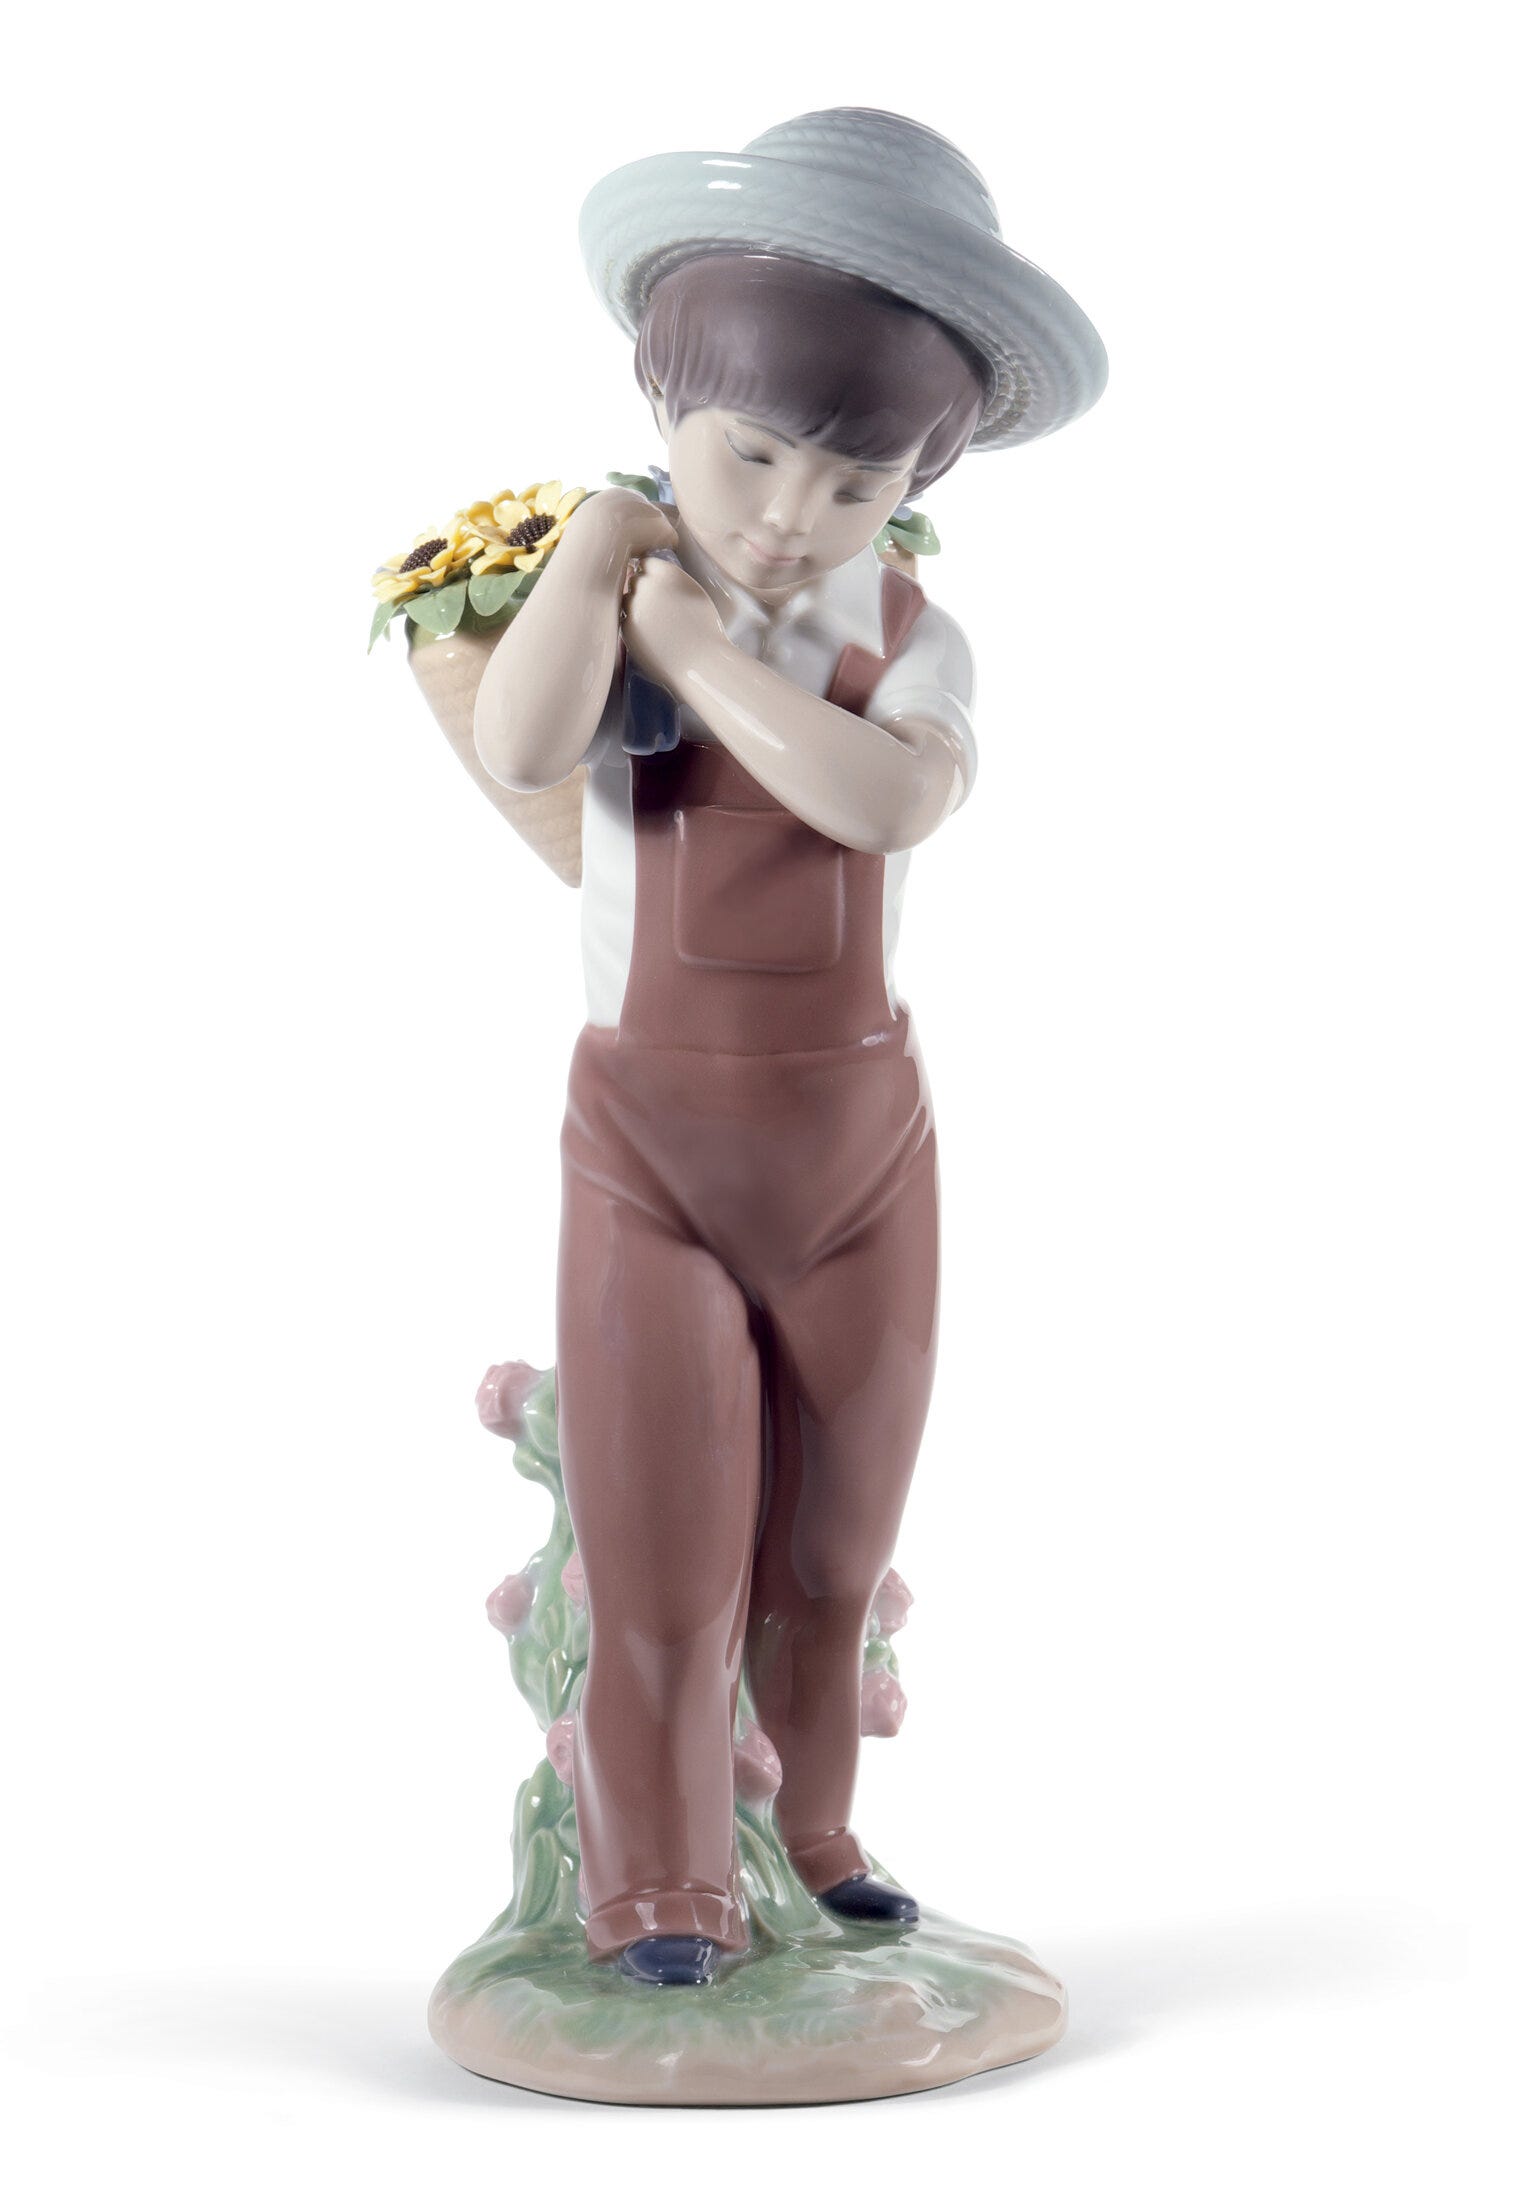 Gathering Flowers Boy Figurine. 60th Anniversary